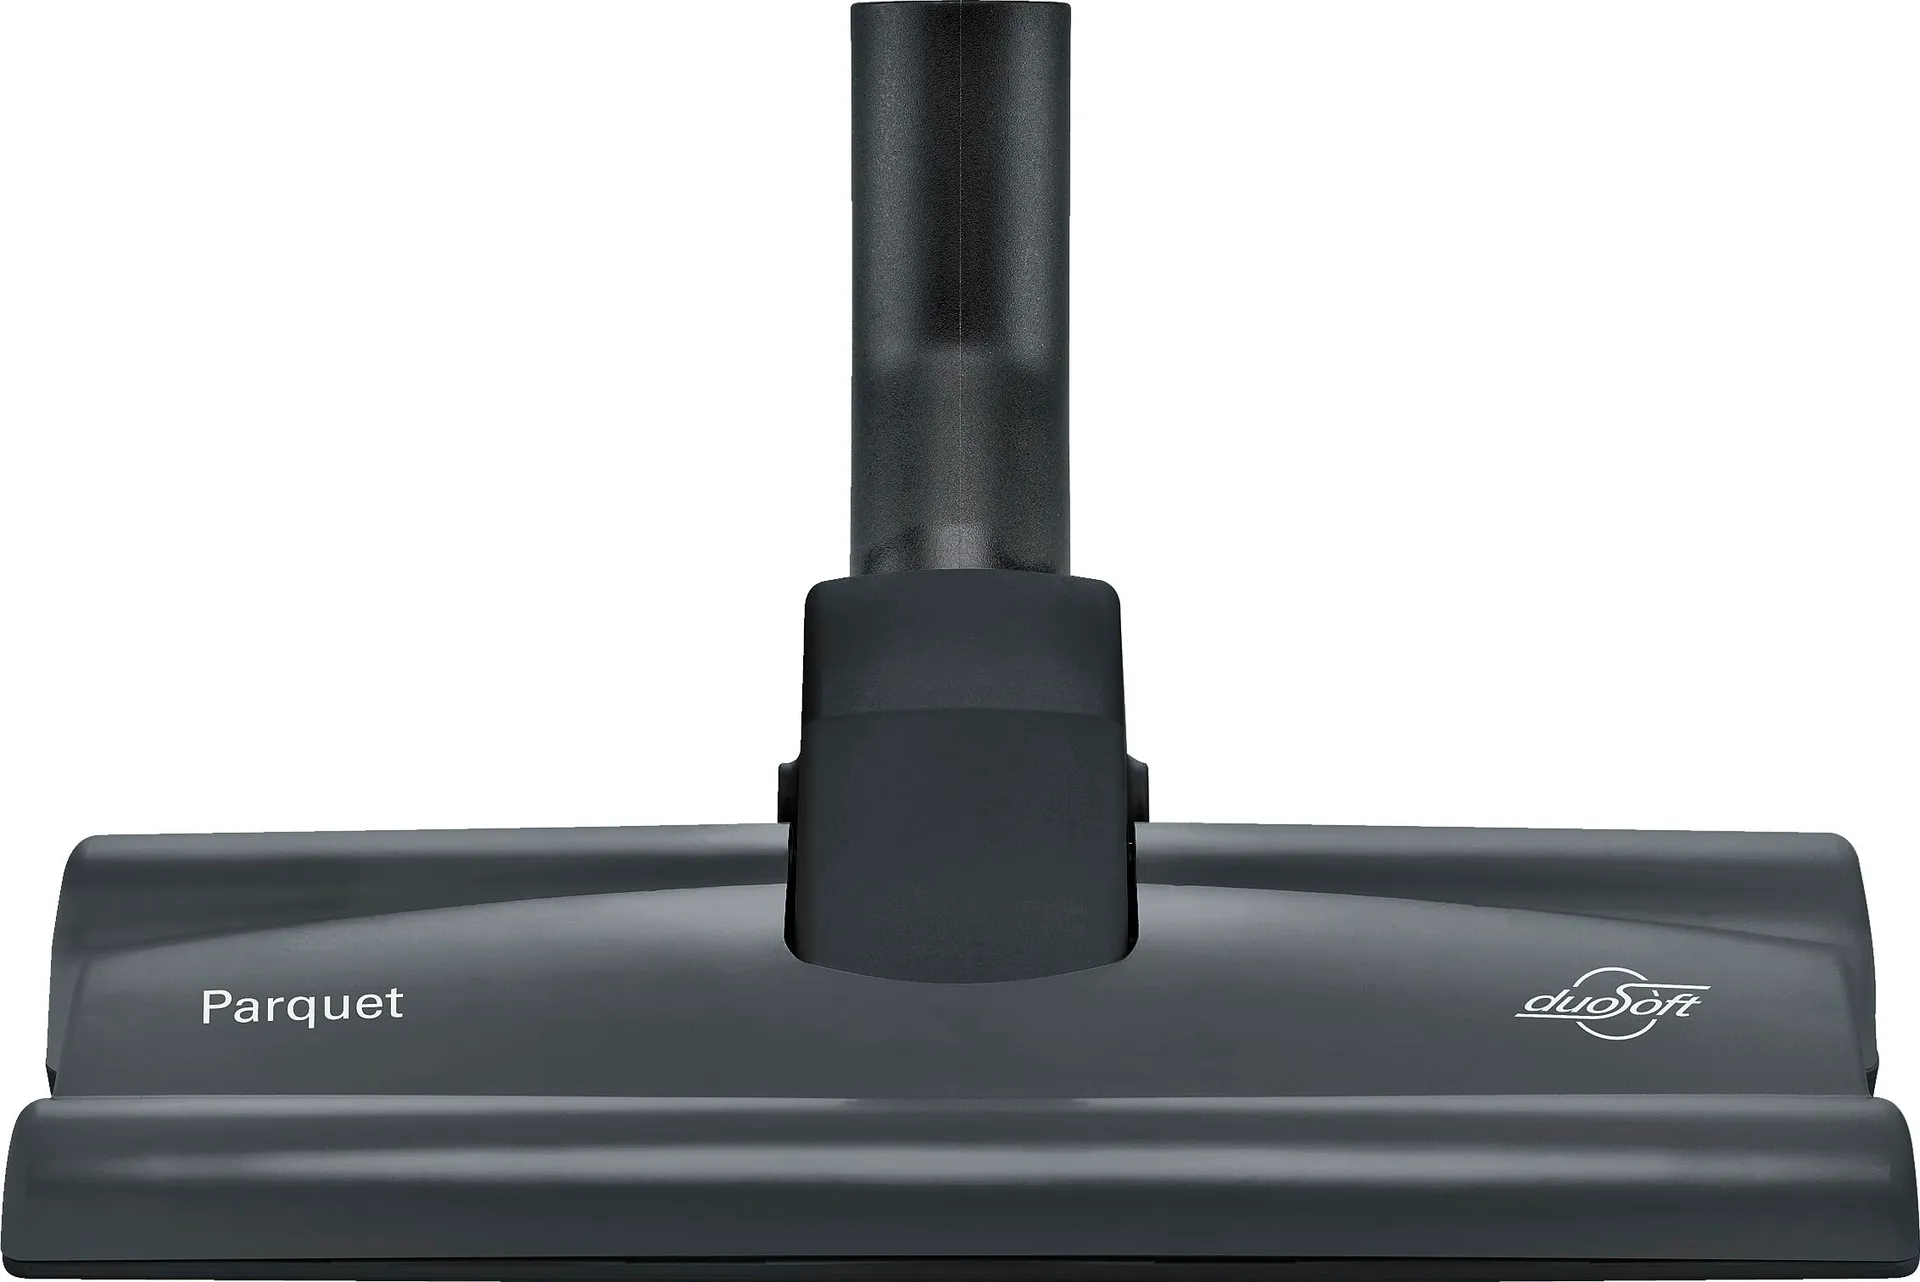 Bosch suulake DuoSoft BBZ124HD koville pinnoille